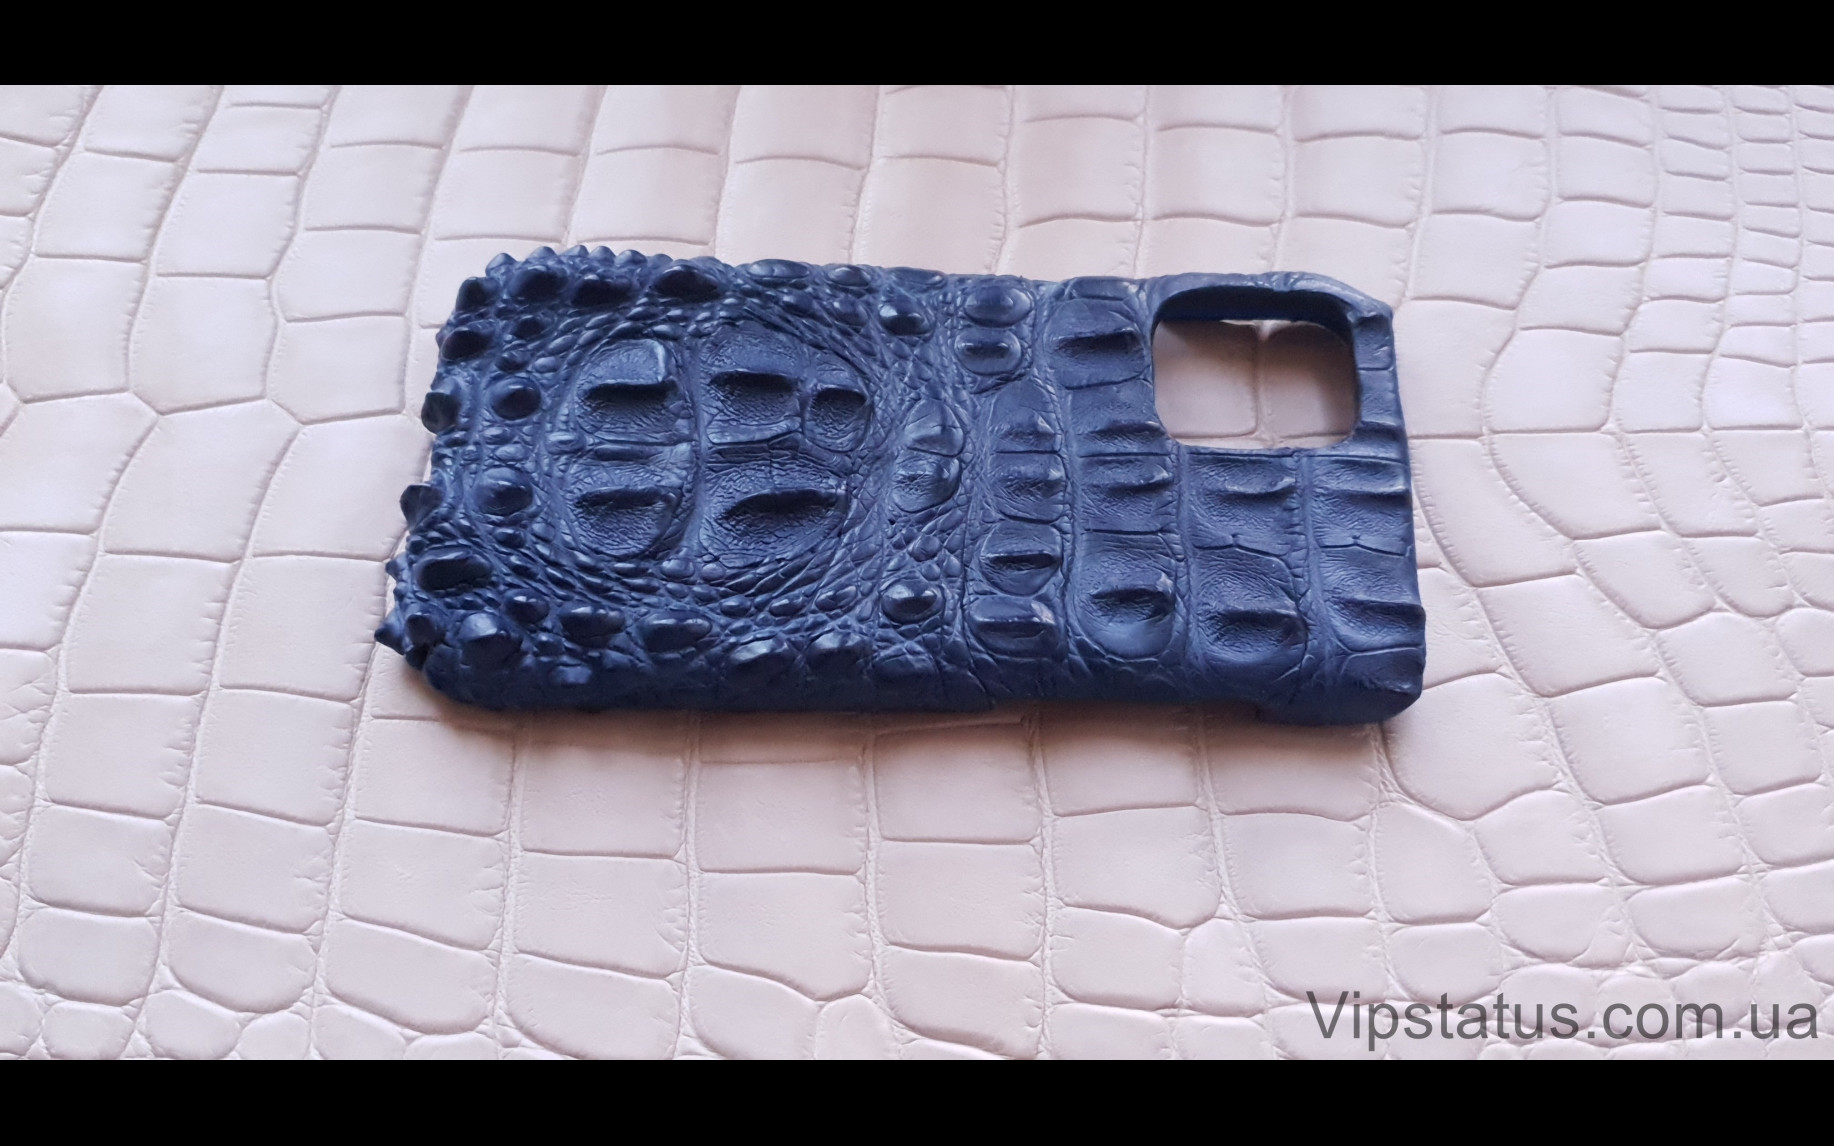 Elite Blue King Премиум чехол IPhone 11 12 Pro Max кожа крокодила Blue King Premium case IPhone 11 12 Pro Max Crocodile leather image 4